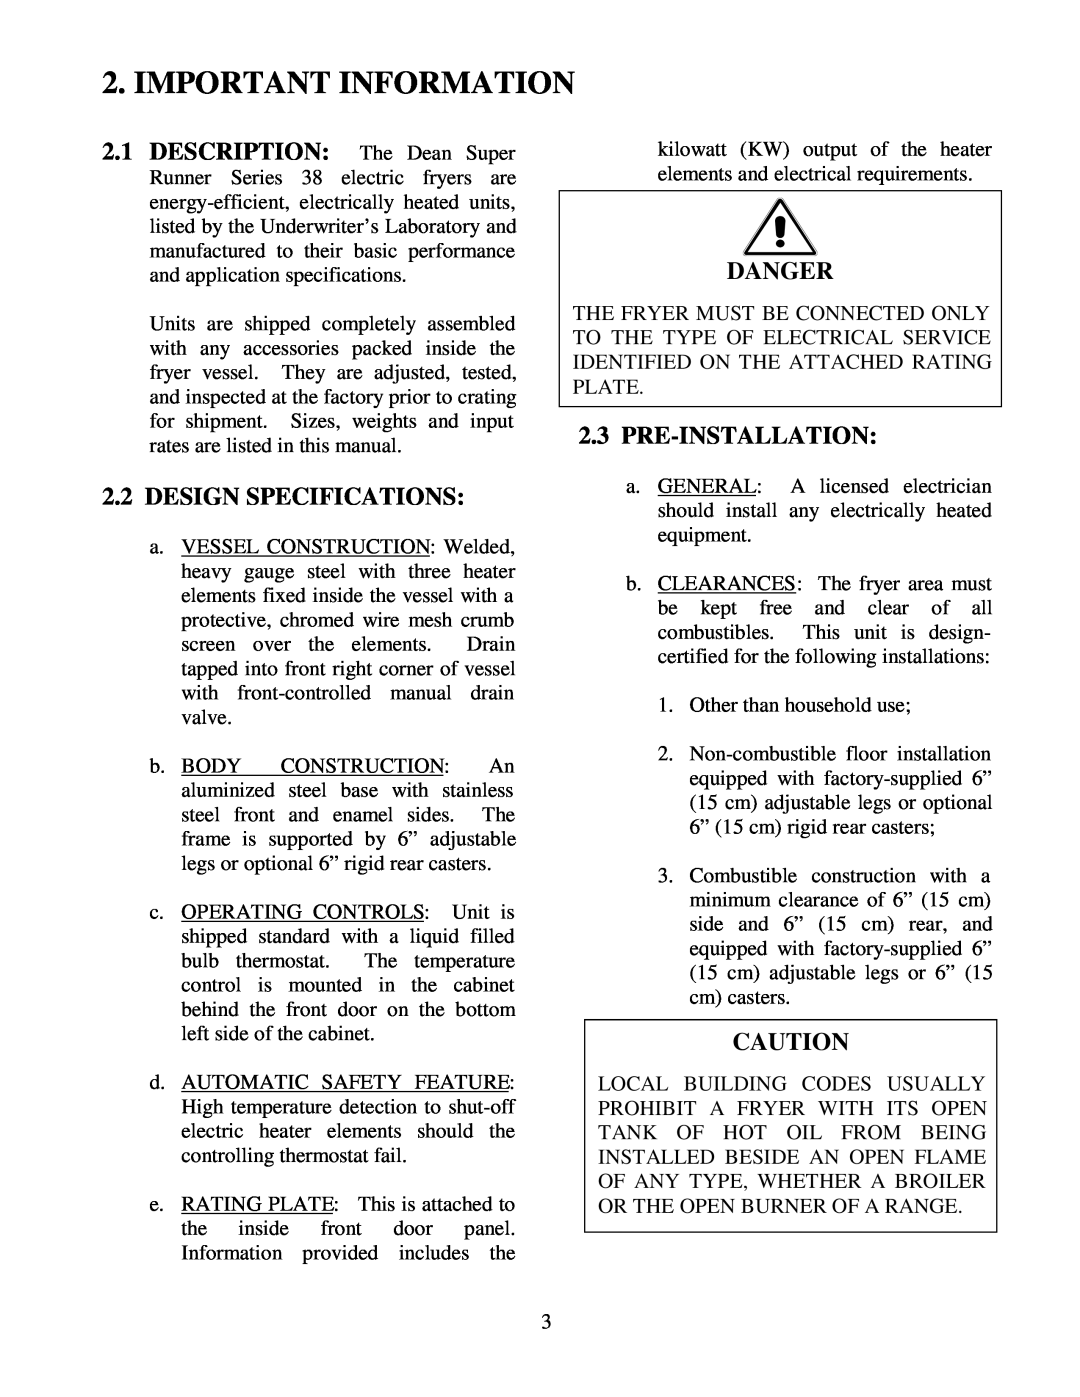 Frymaster 38 Series operation manual Important Information, DESCRIPTION The Dean Super, 2.2DESIGN SPECIFICATIONS, Danger 